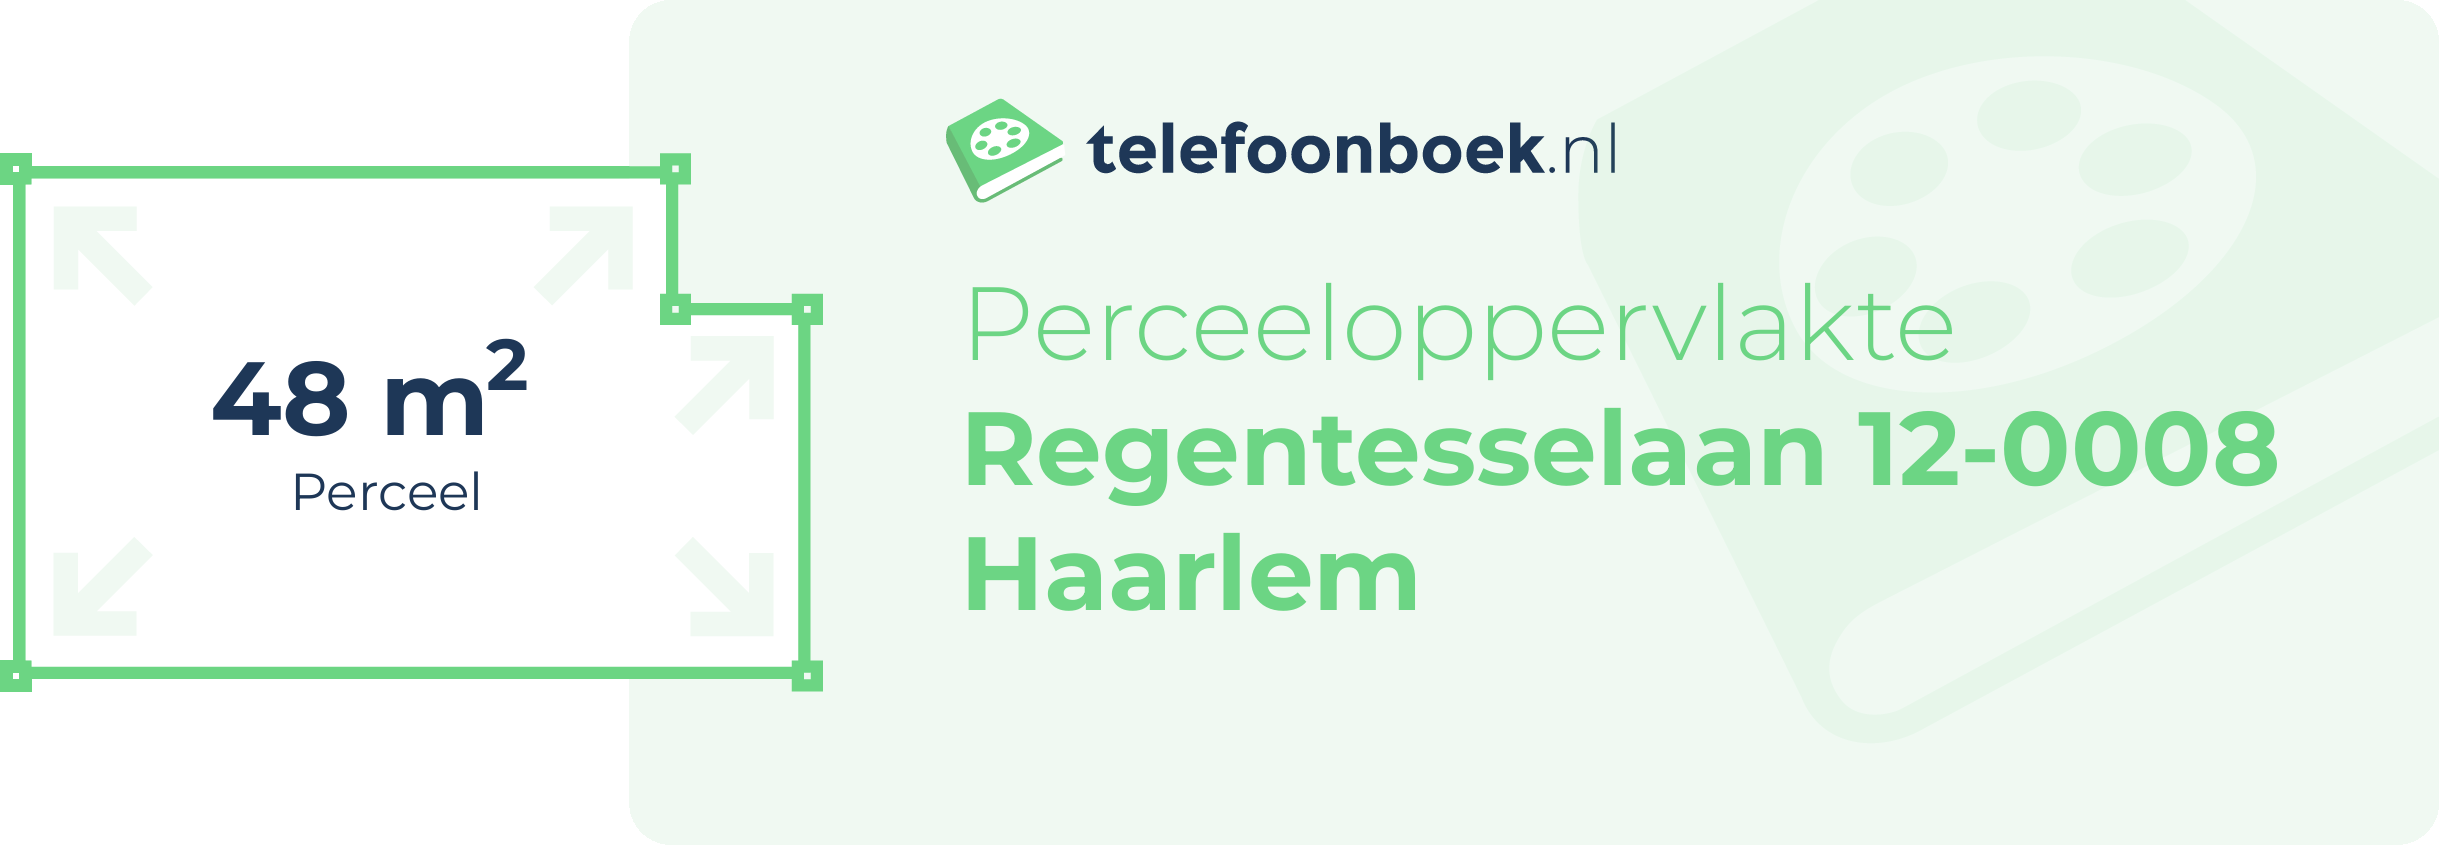 Perceeloppervlakte Regentesselaan 12-0008 Haarlem